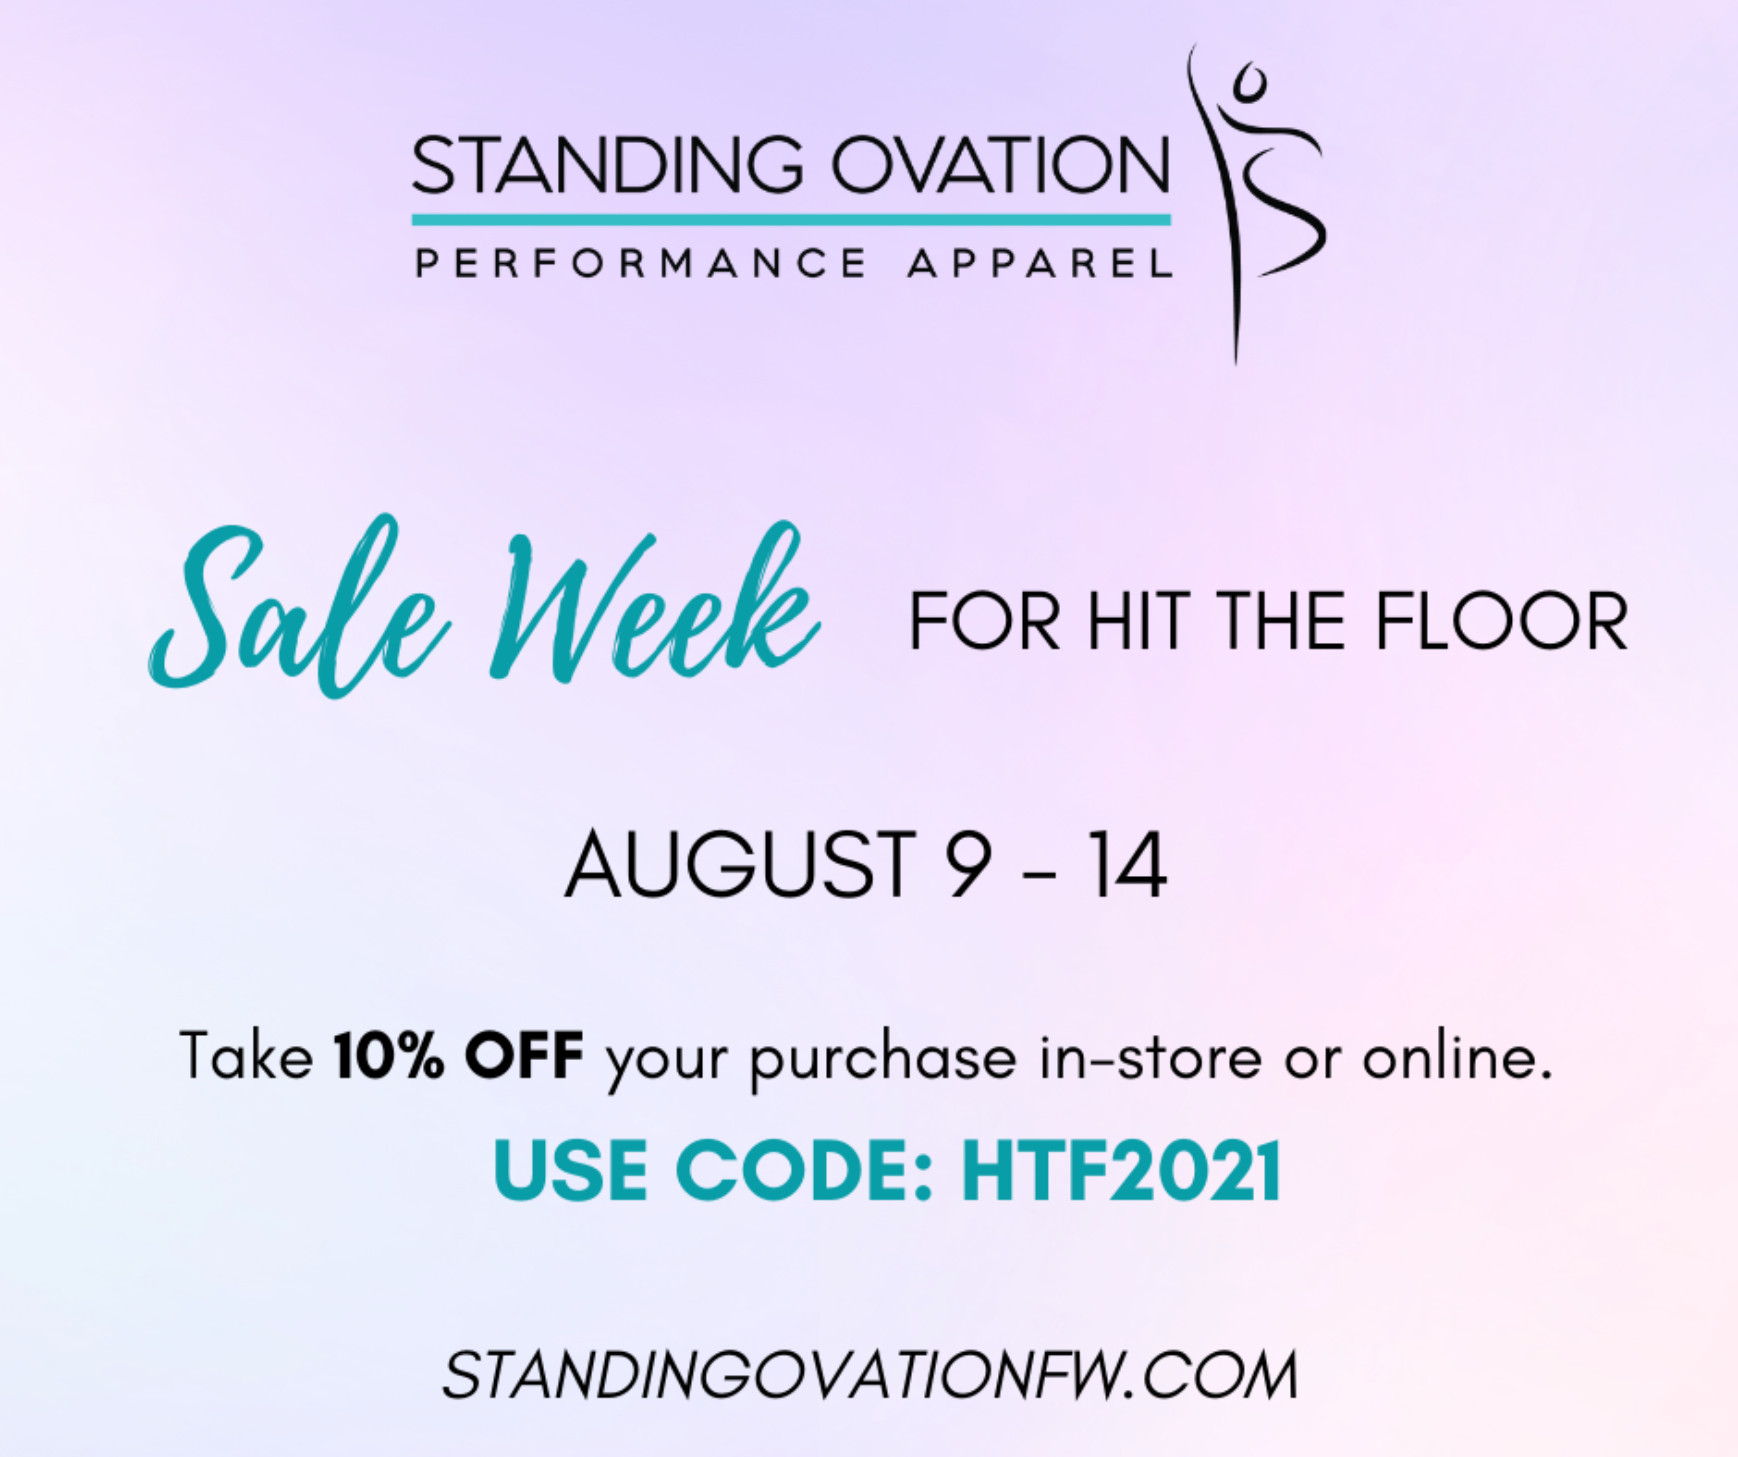 Standing Ovation Sales Week